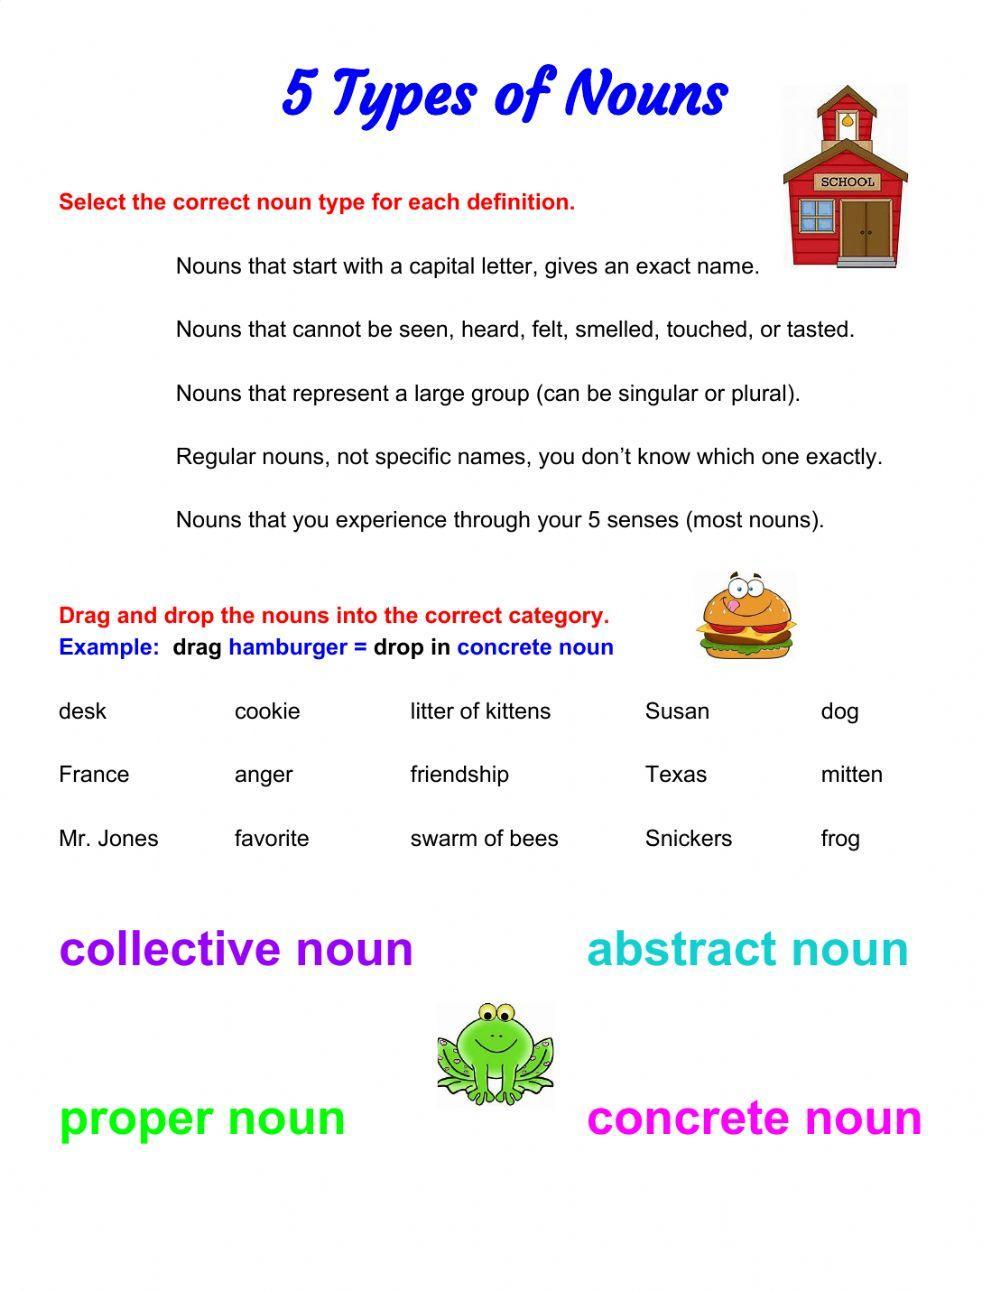 5 Types of Nouns (schoolhouse)